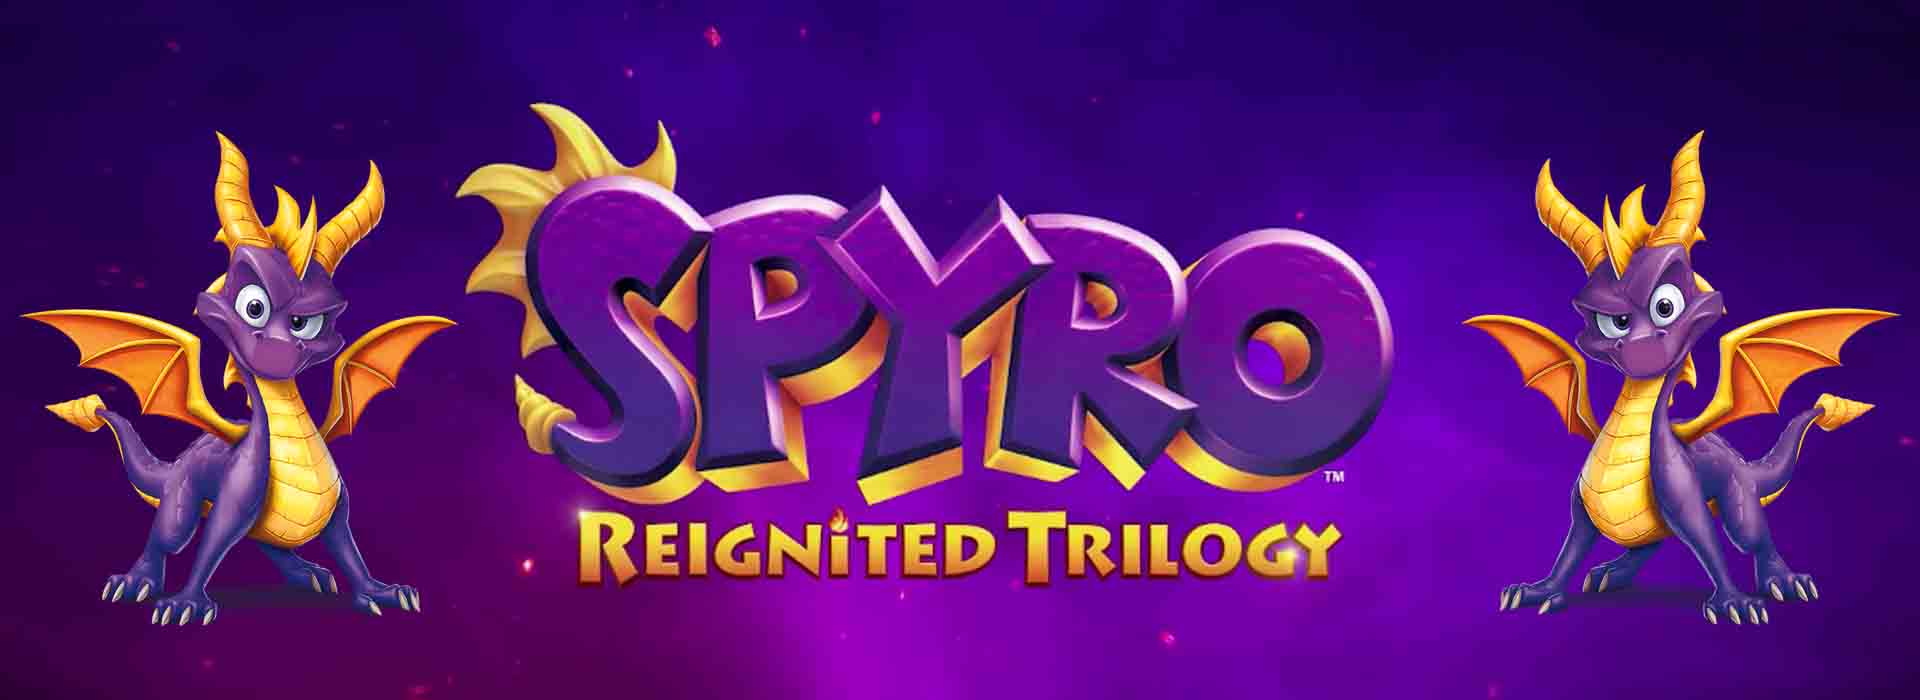 spyro the dragon ps4 release date